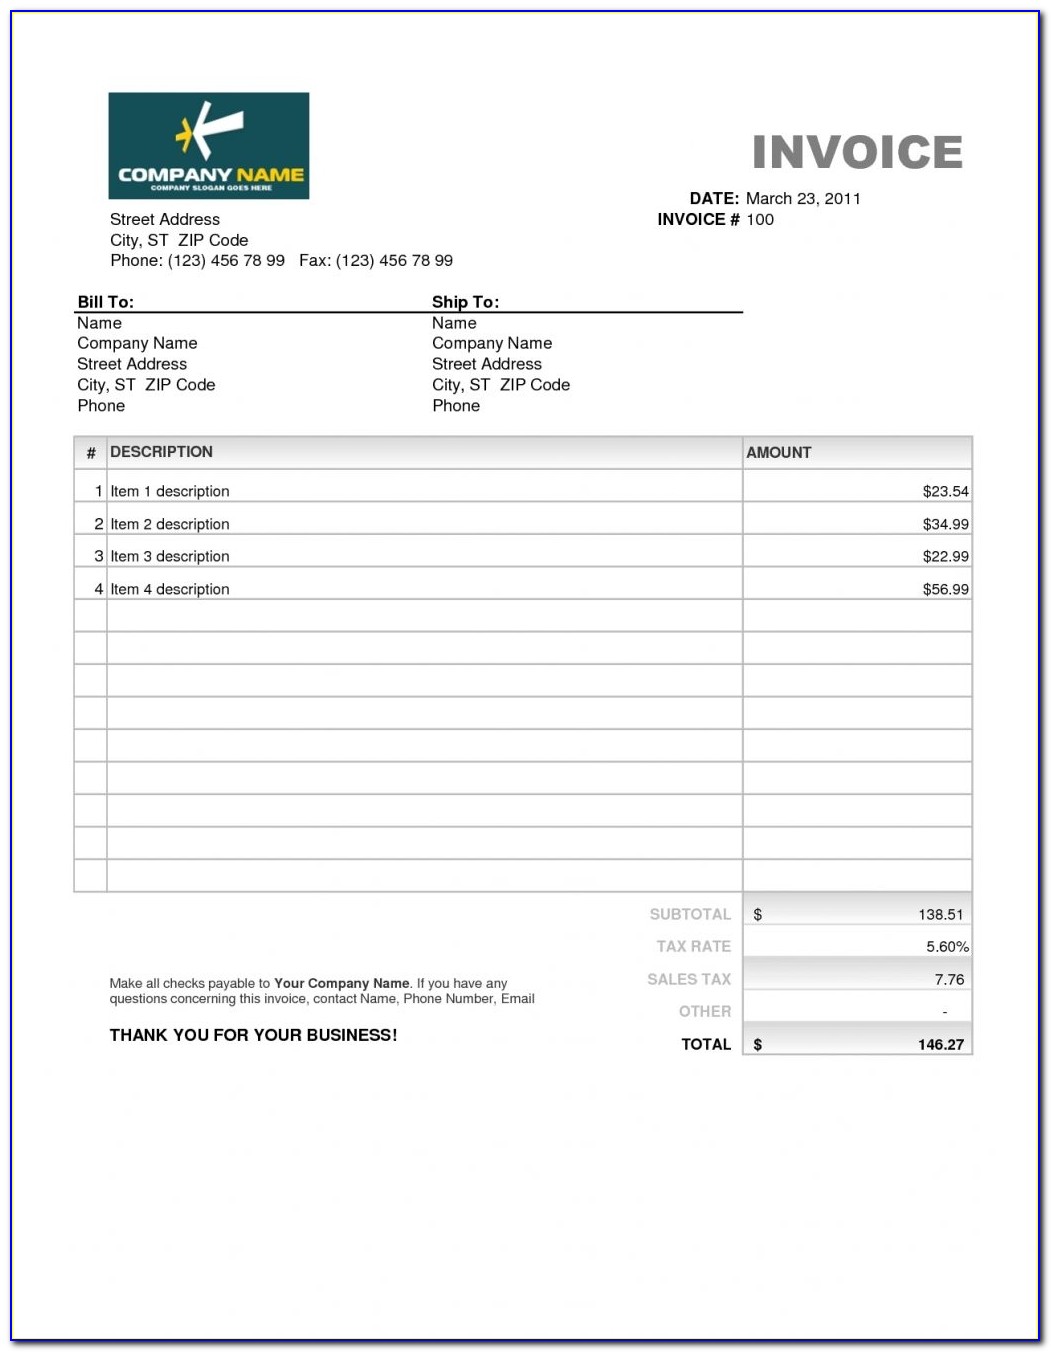 Customize Quickbooks Invoice Fields